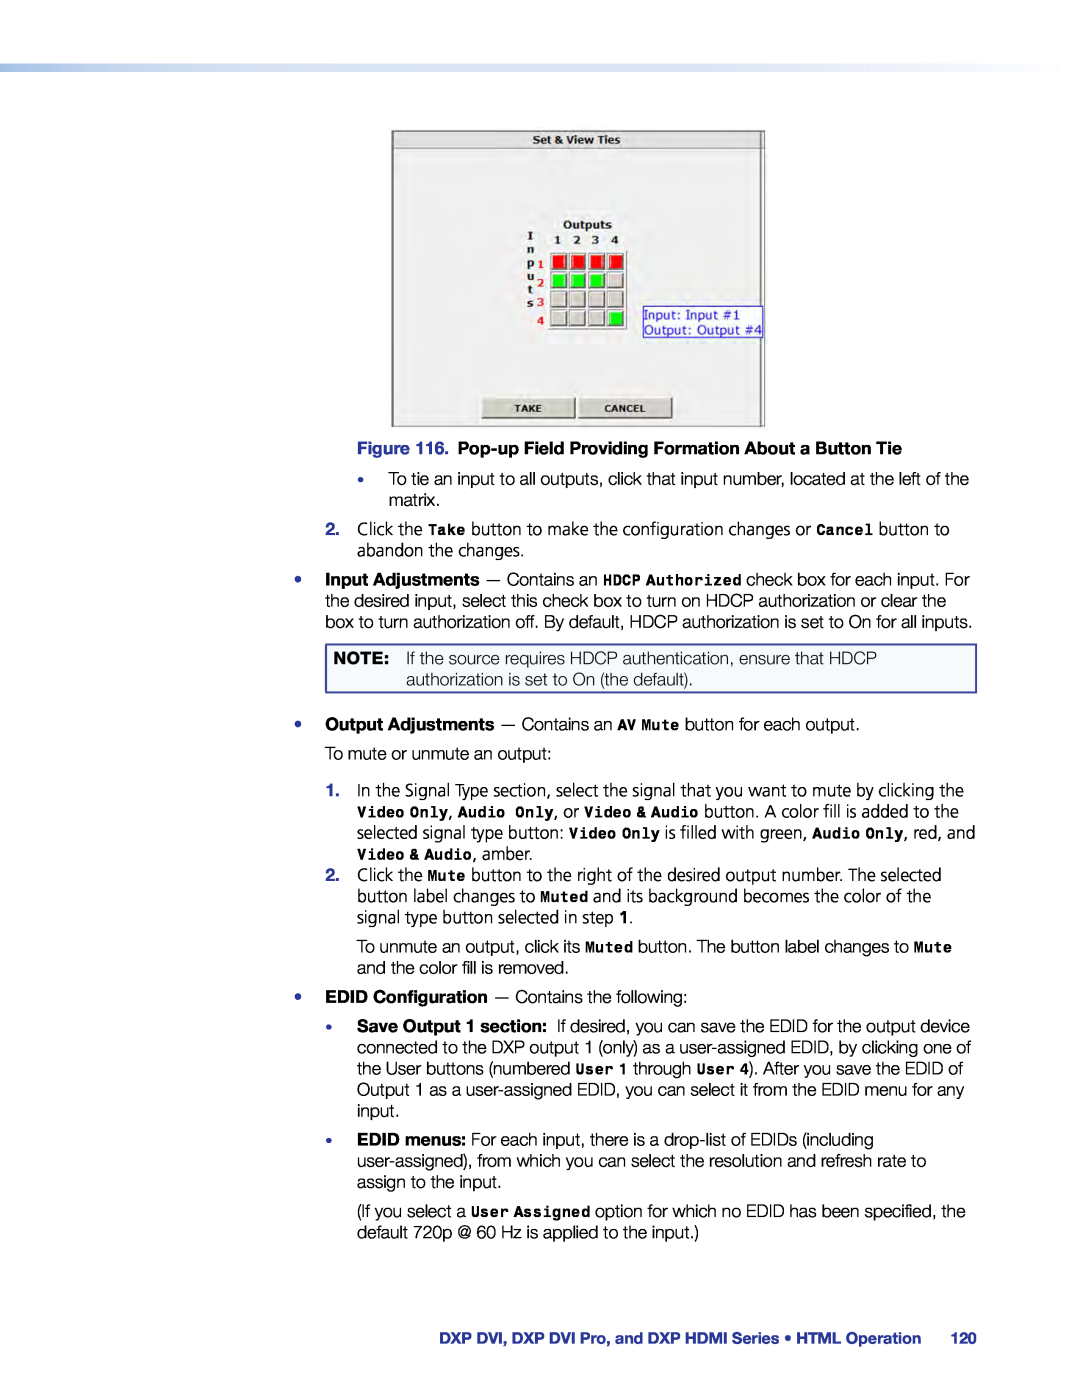 Extron electronic DXP DVI PRO manual Pop-up Field Providing Formation About a Button Tie 